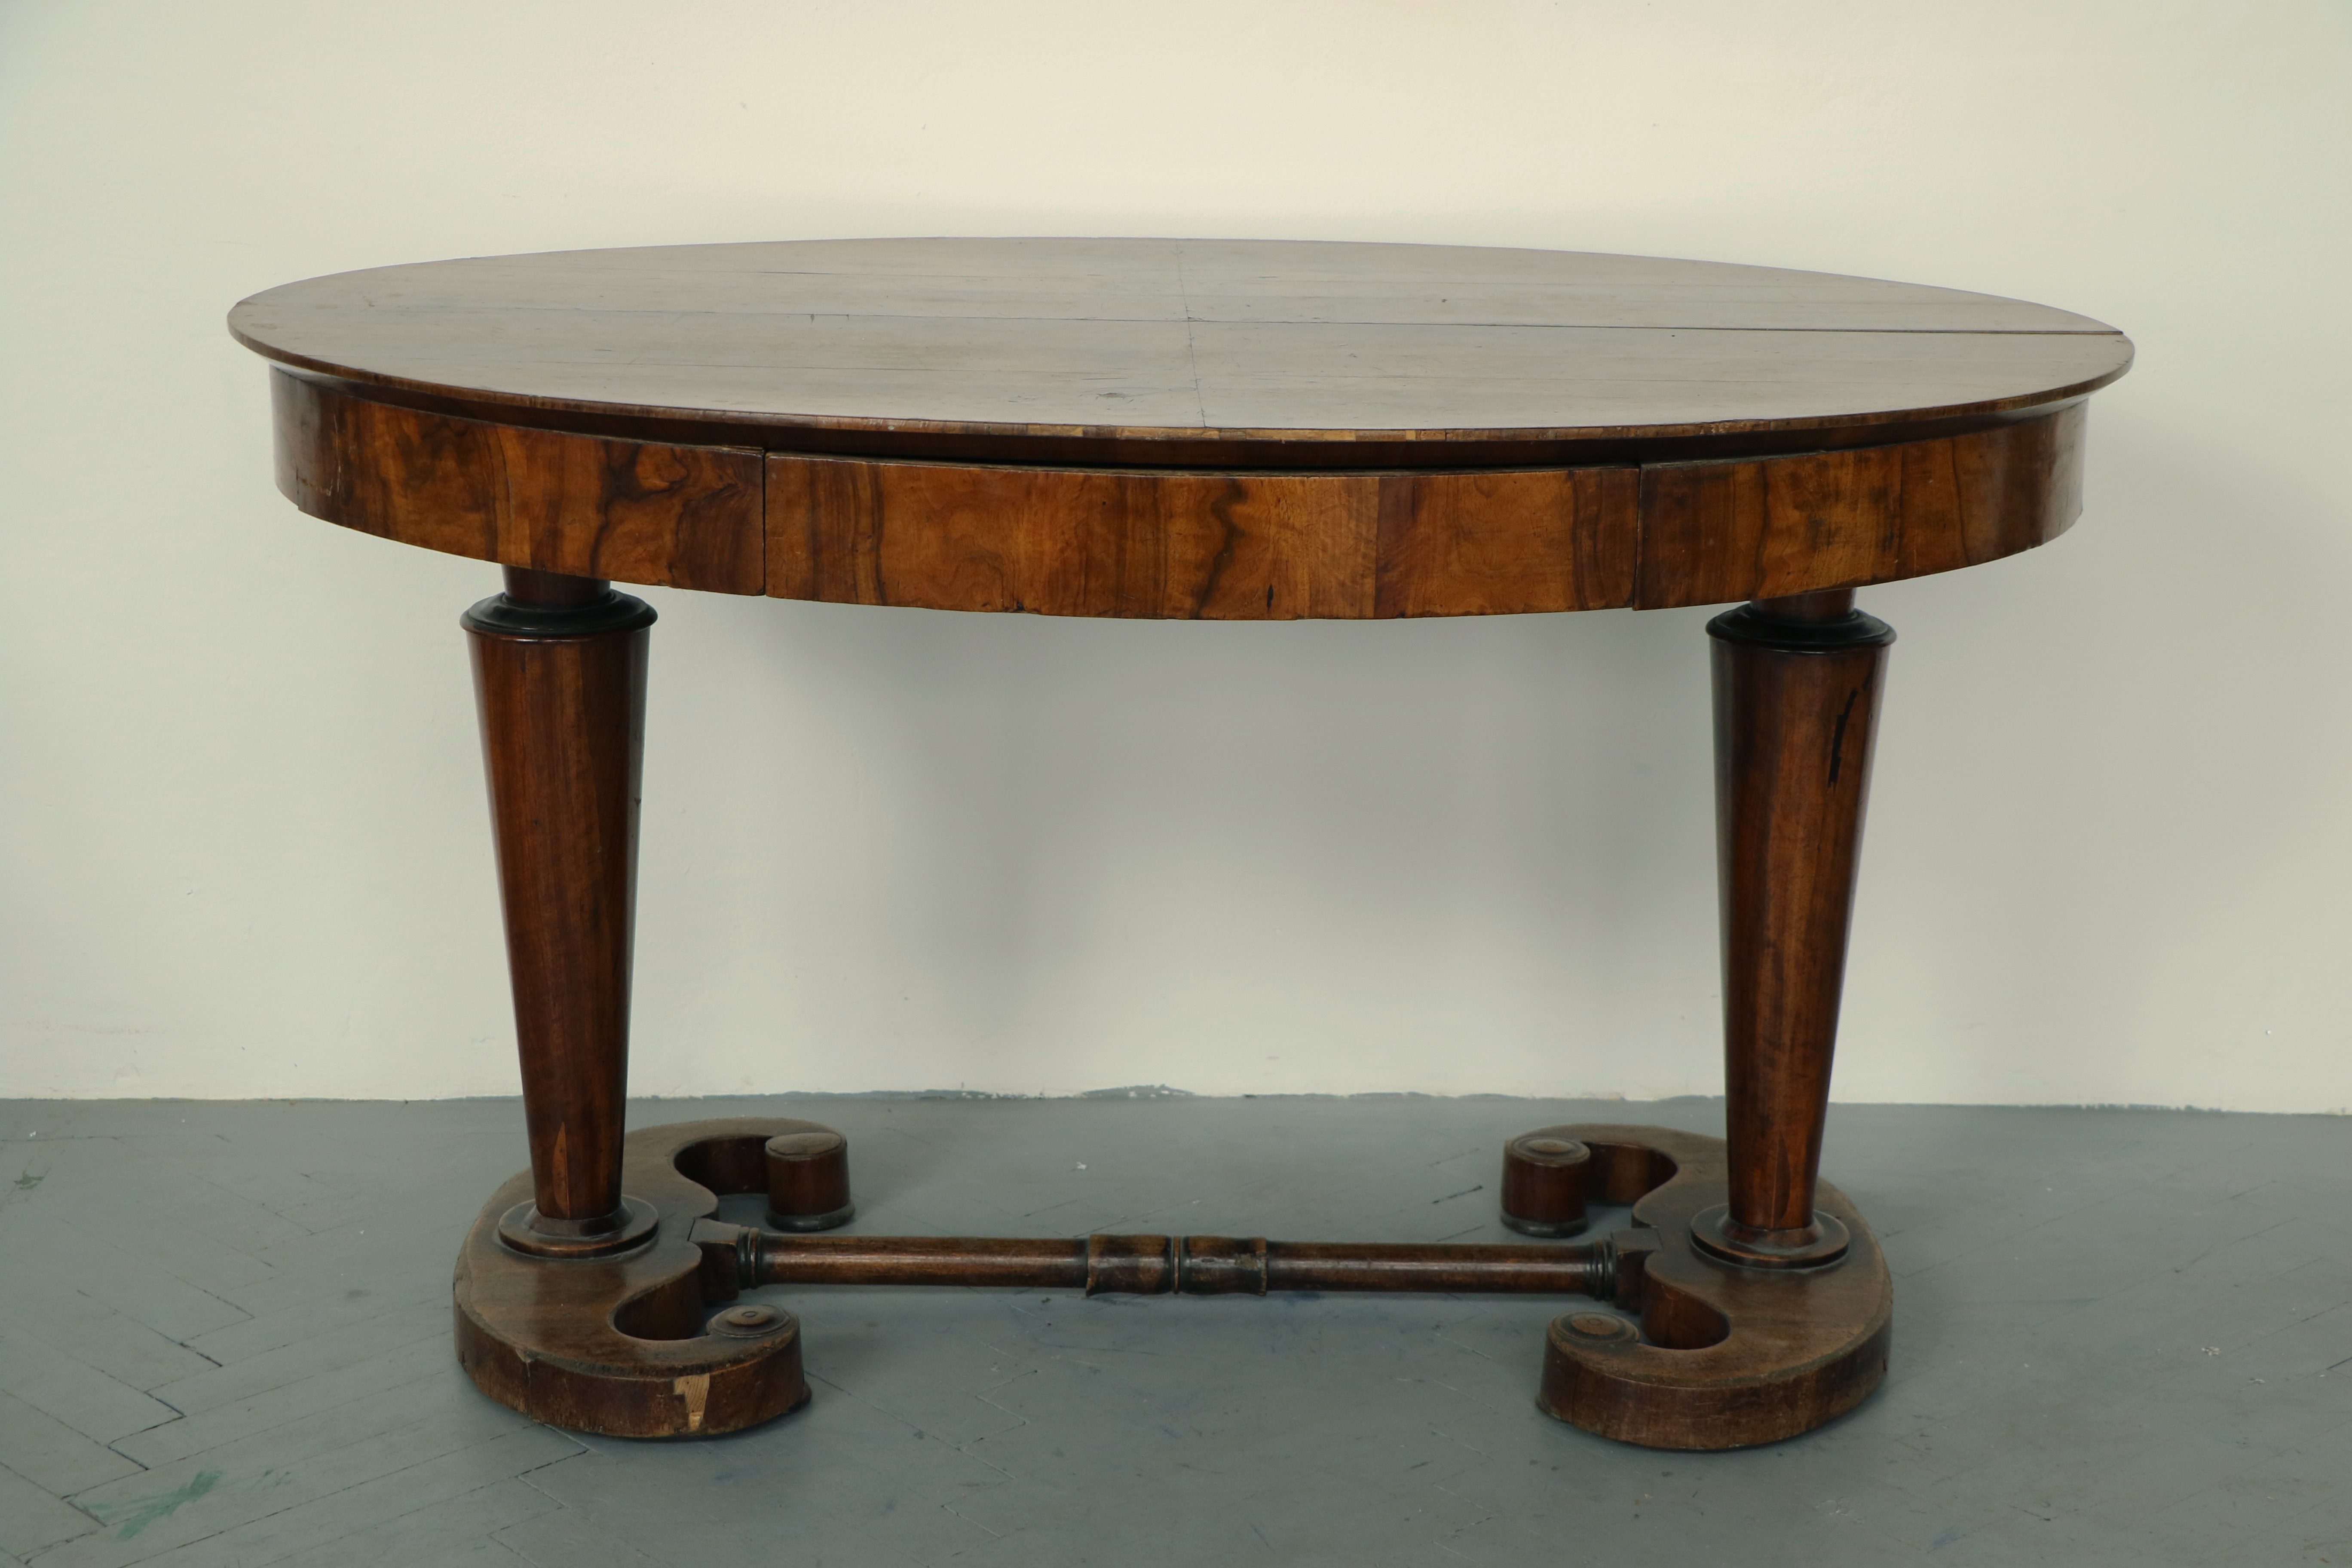 Vienna Biedermeier Table before restoration.